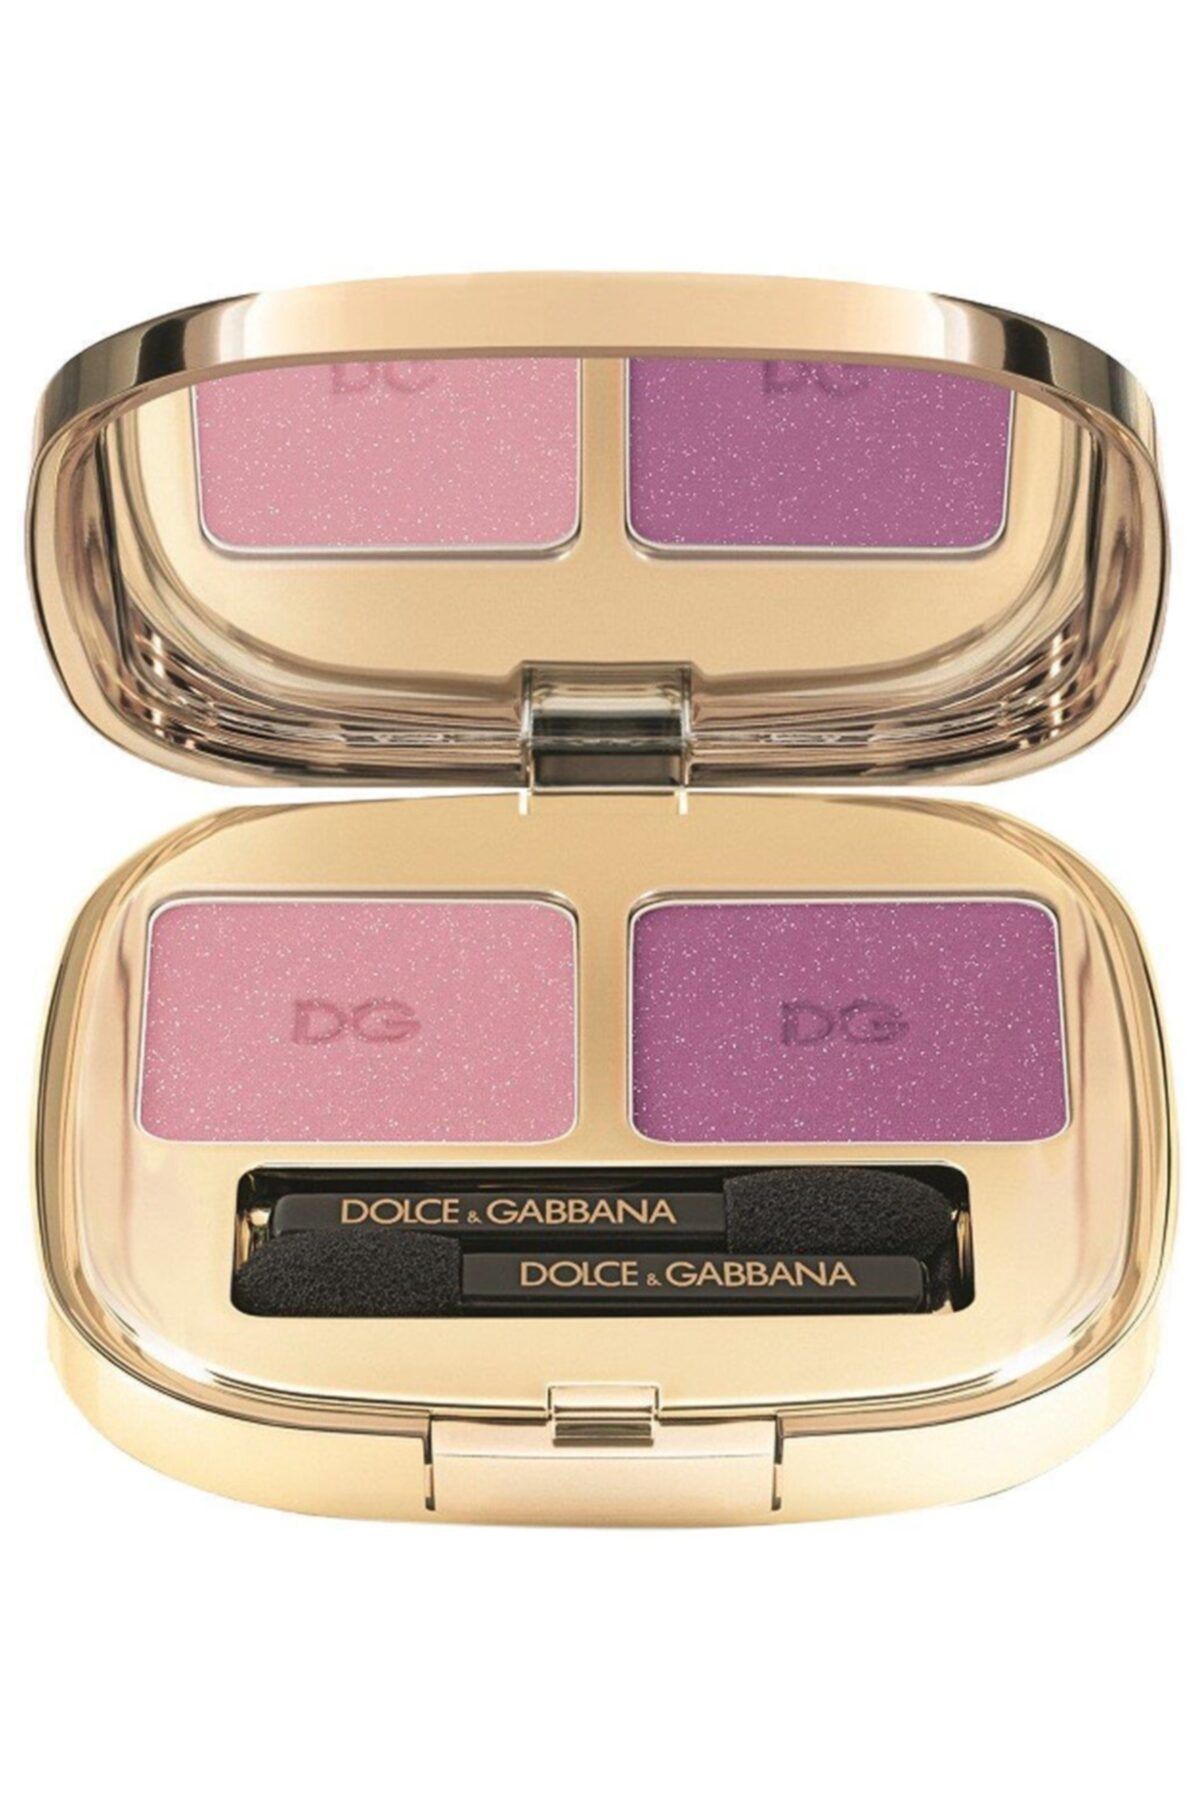 Dolce&Gabbana Smooth Eye Colour Duo Göz Farı - 102 730870275733